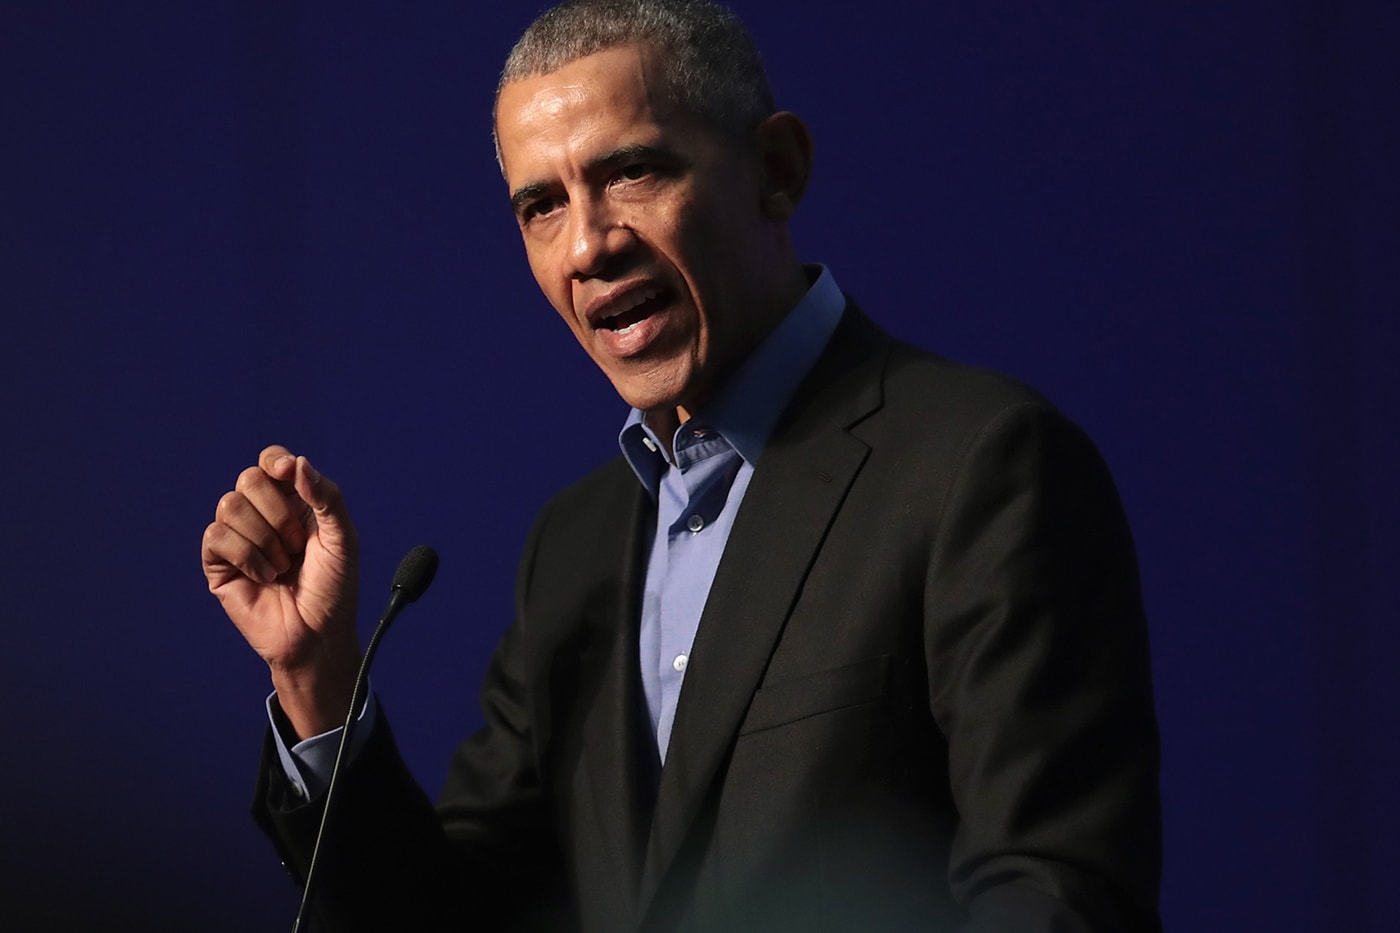 Barack Obama speaks on Dangers of Cancel Culture cnn anderson cooper 360 united states president 